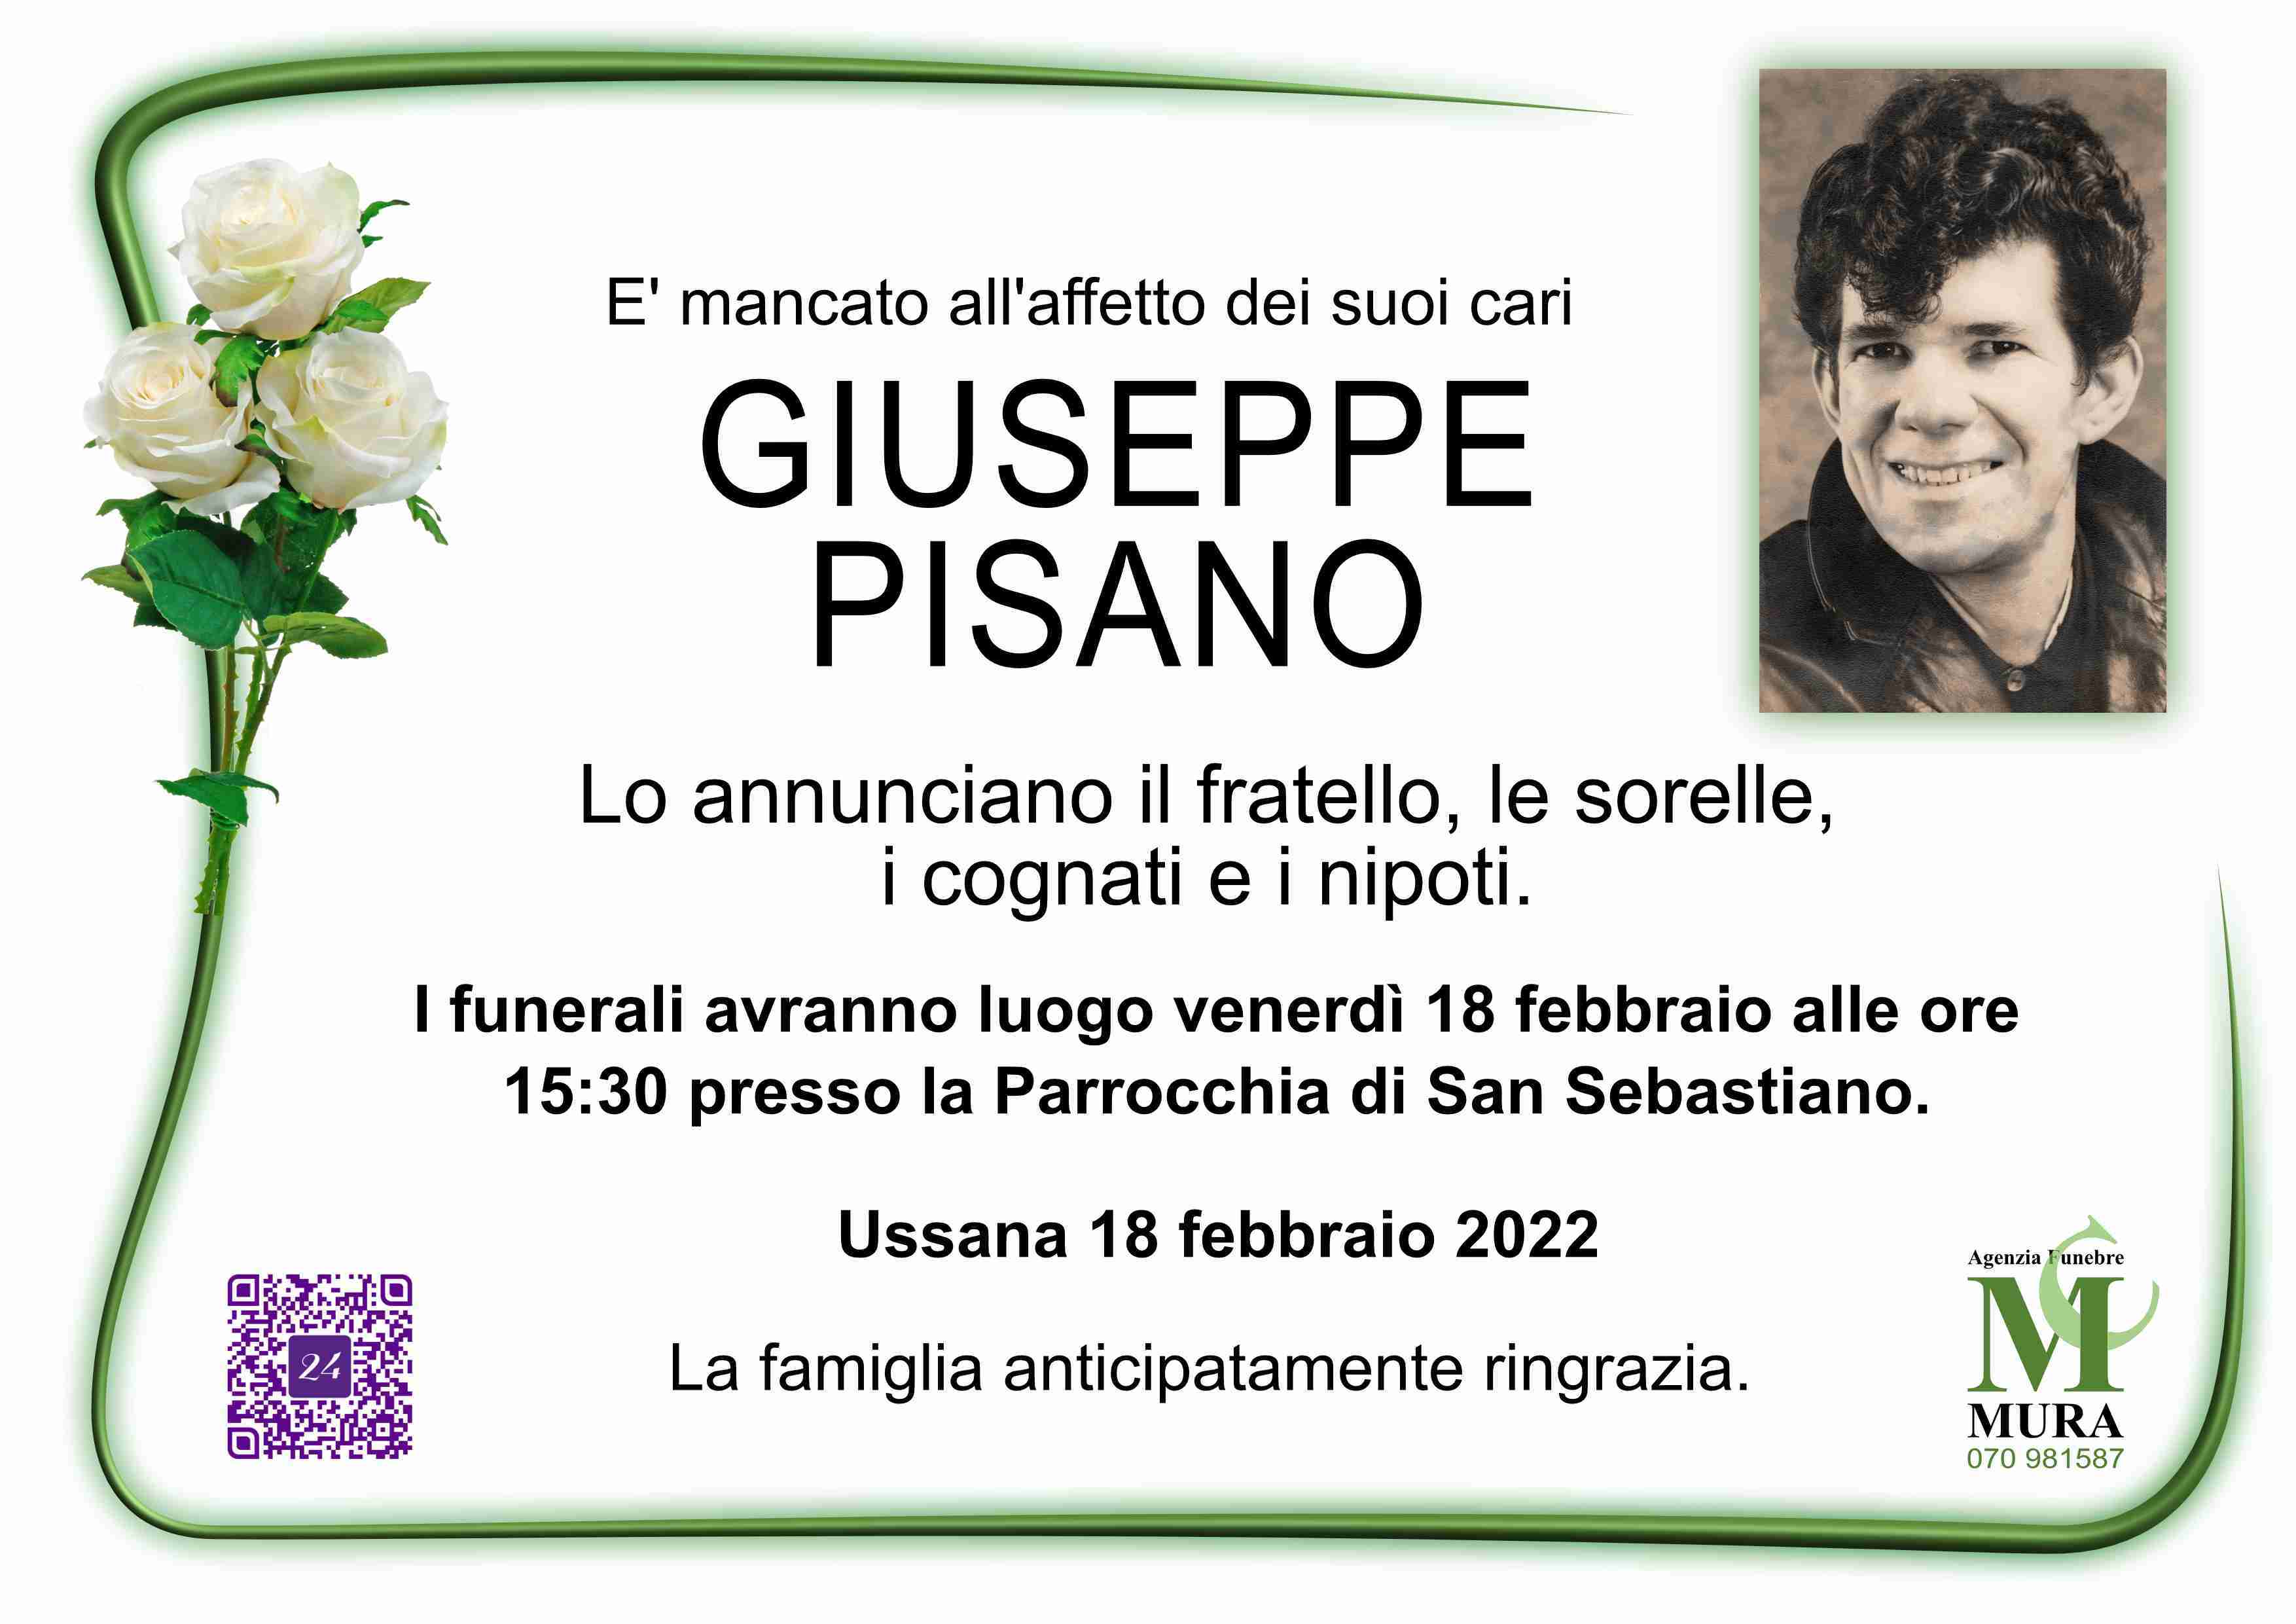 Giuseppe Pisano